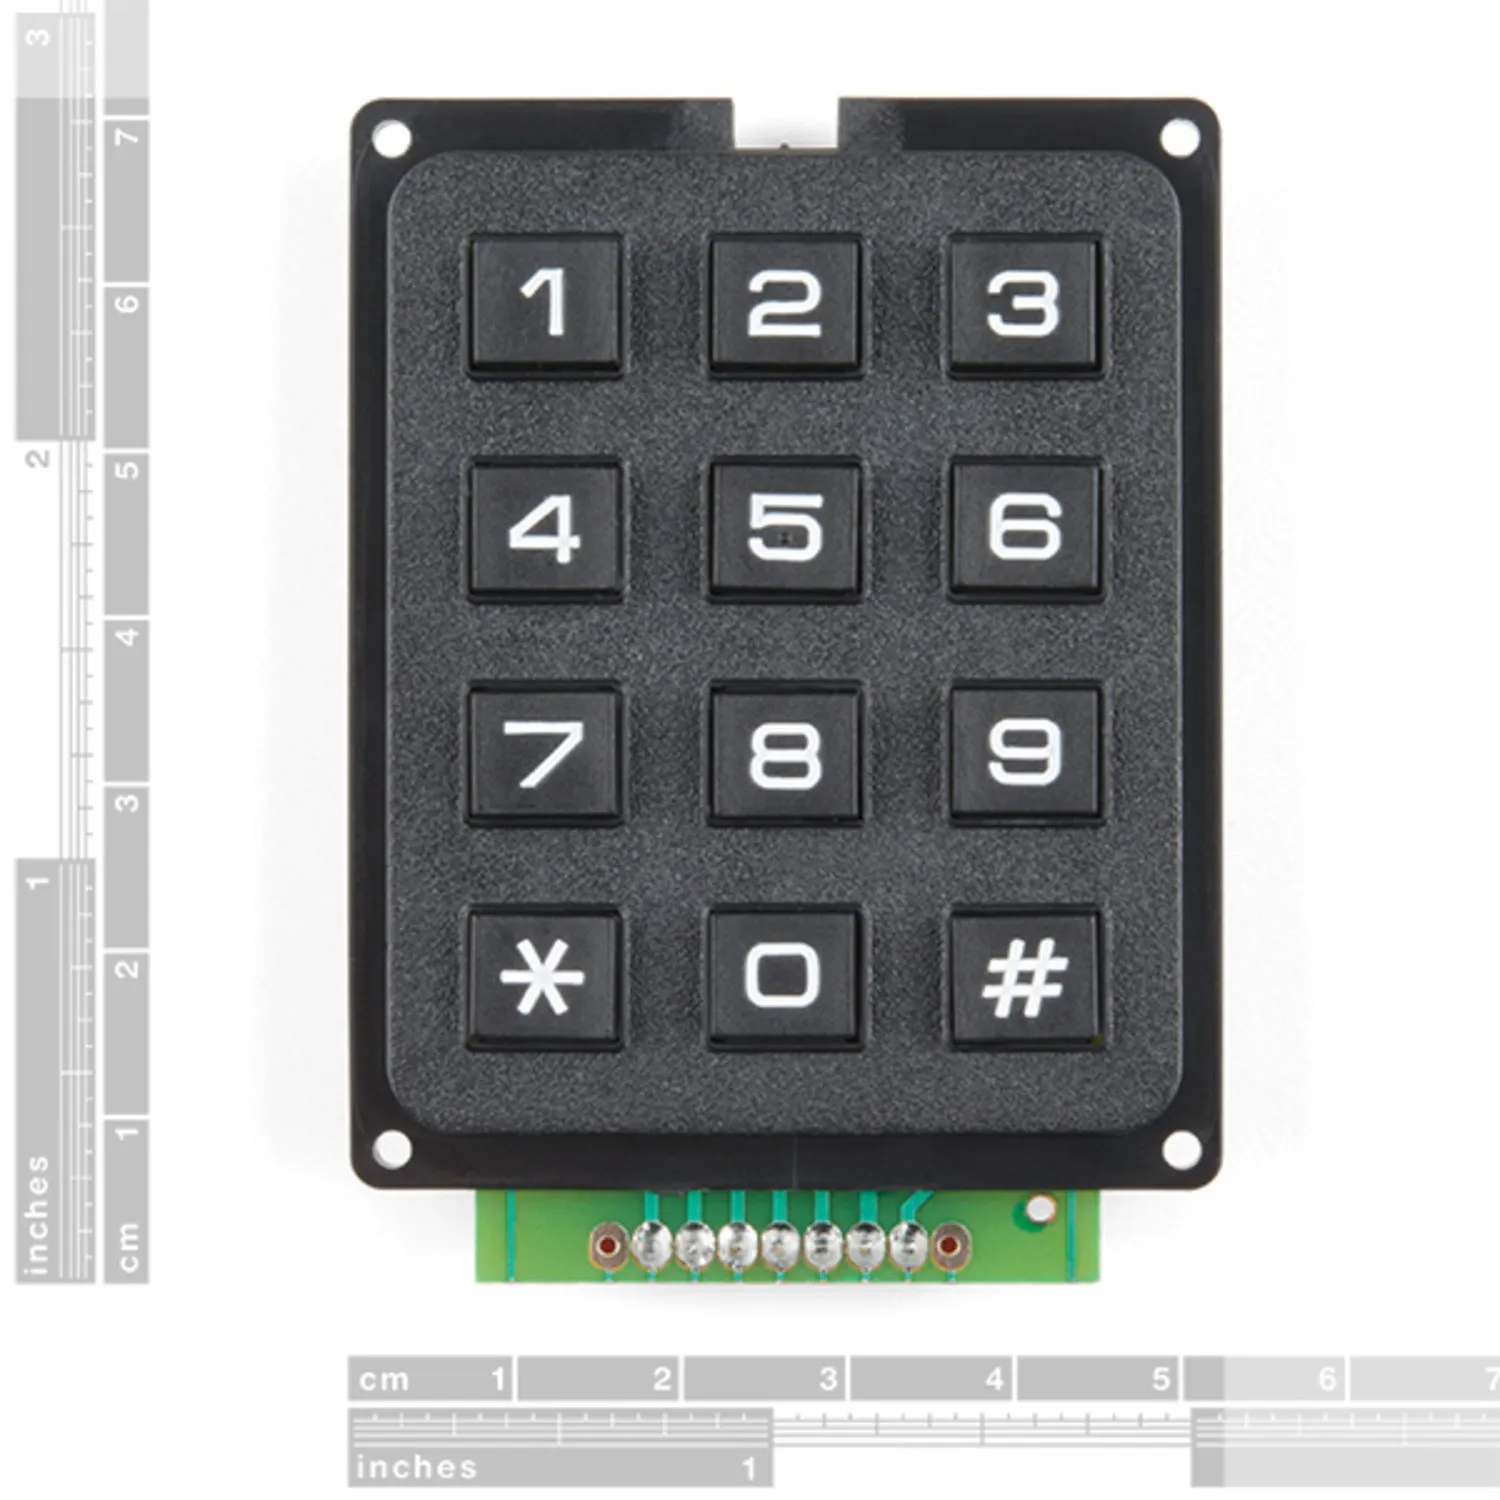 Photo of SparkFun Qwiic Keypad - 12 Button